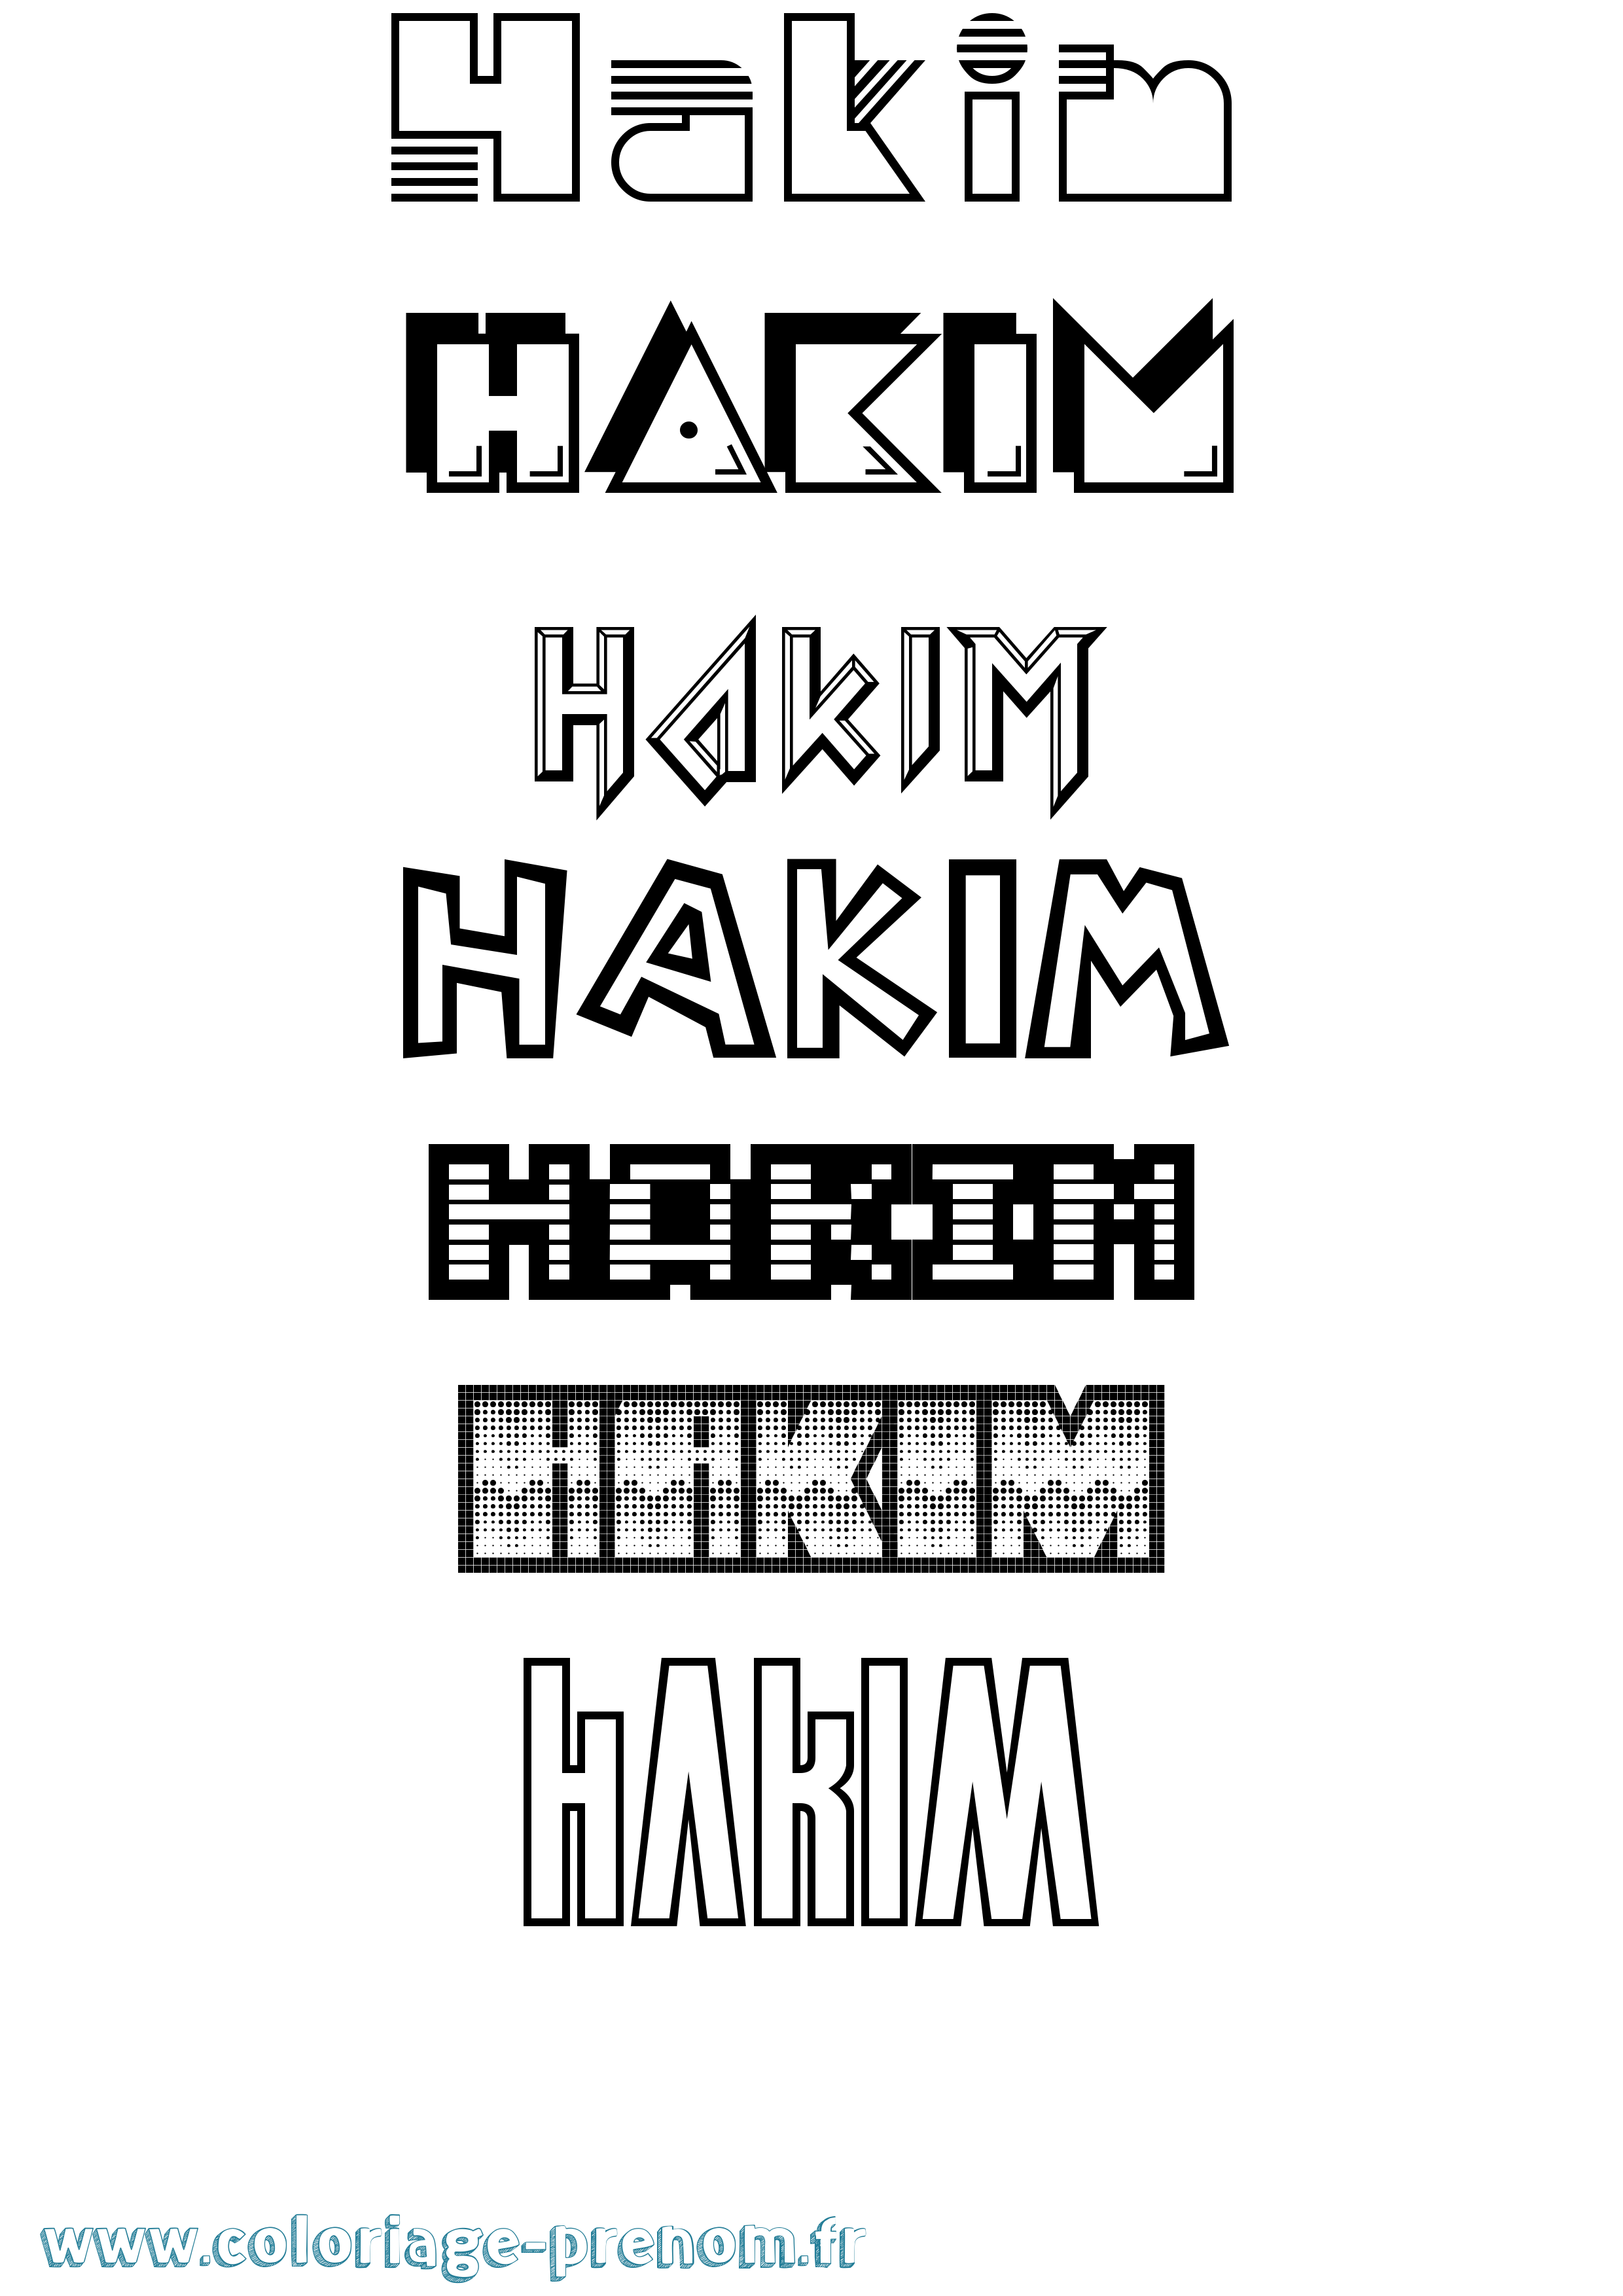 Coloriage prénom Hakim